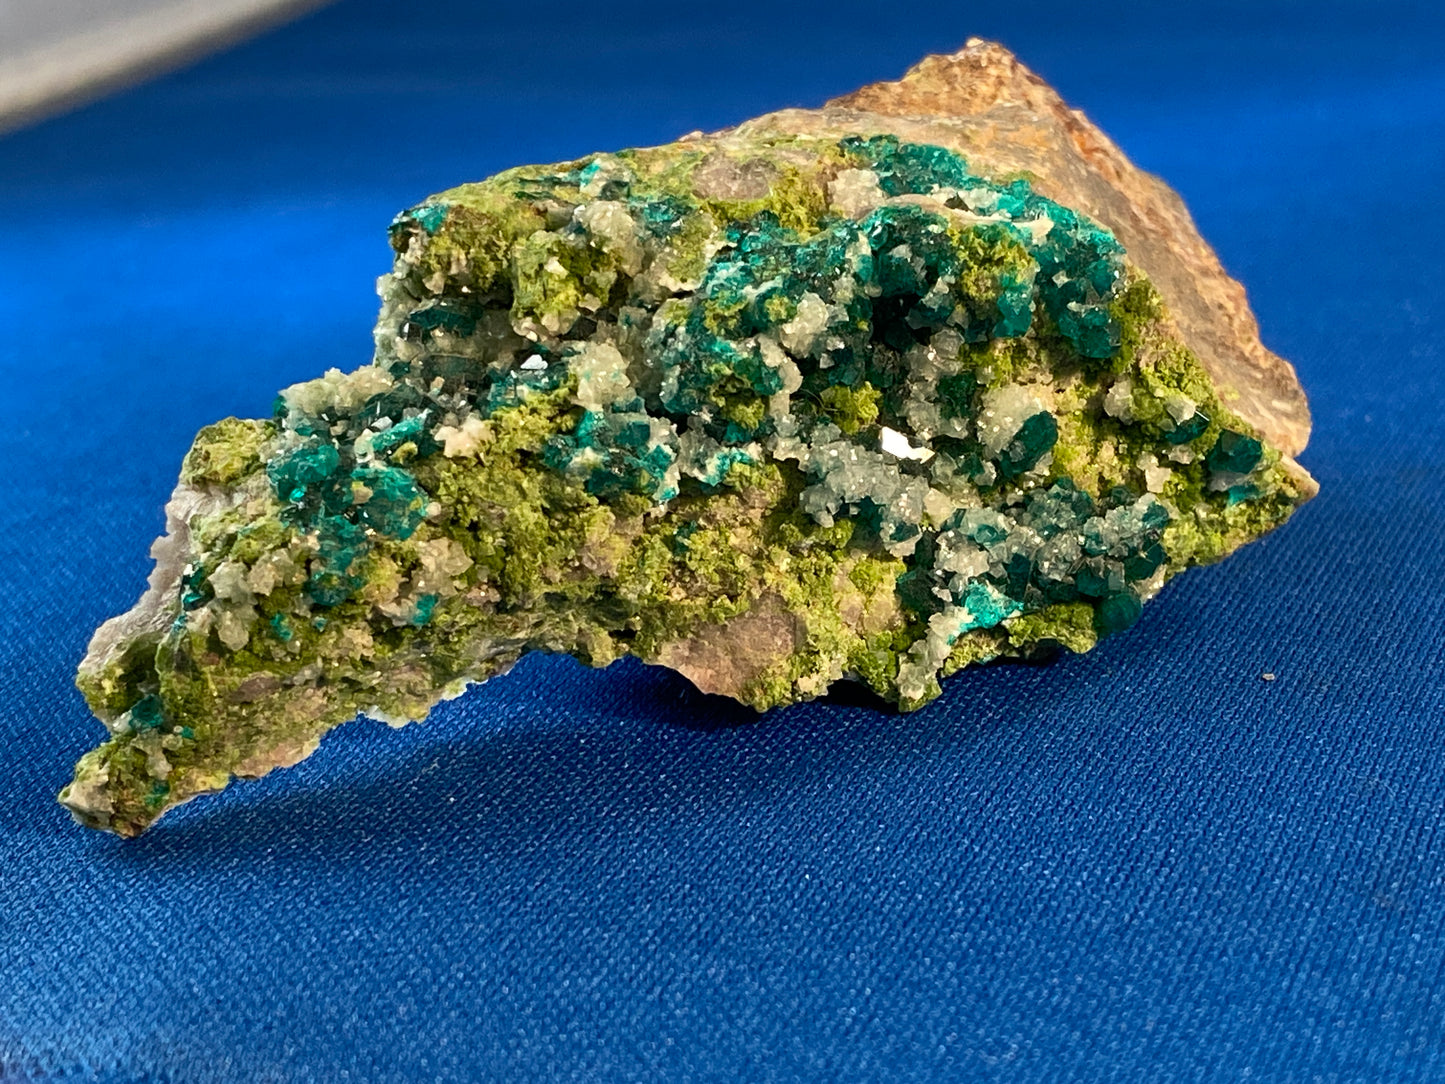 Dioptase, Duftite & Calcite, Tsumeb, Namibia (Ex Prosper J. Williams)